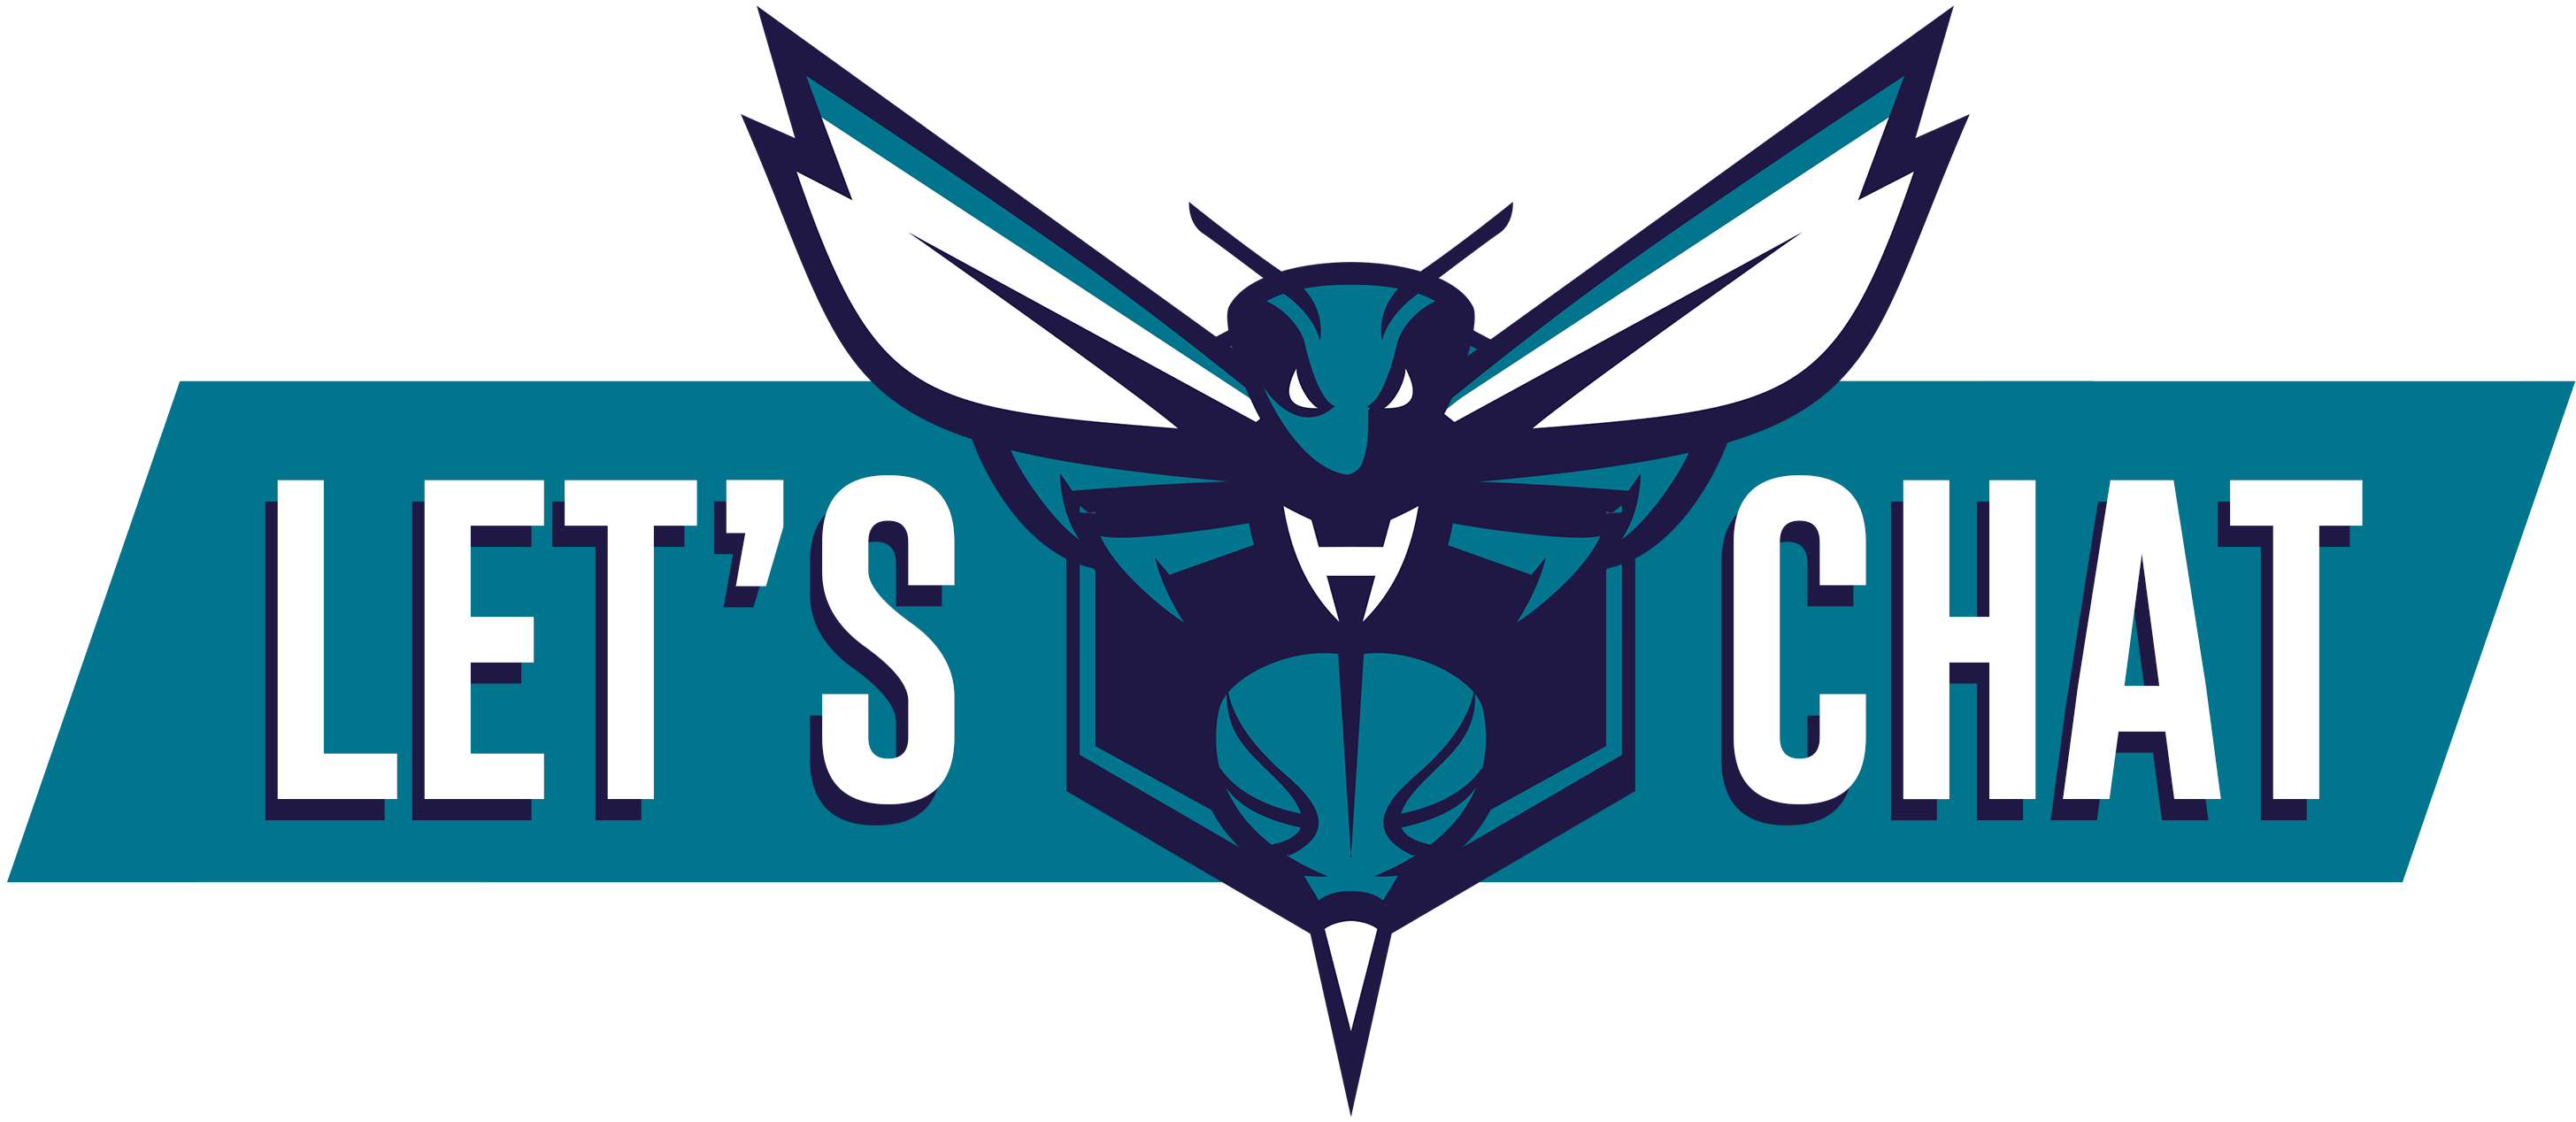 Charlotte Hornets Logo PNG Image HD